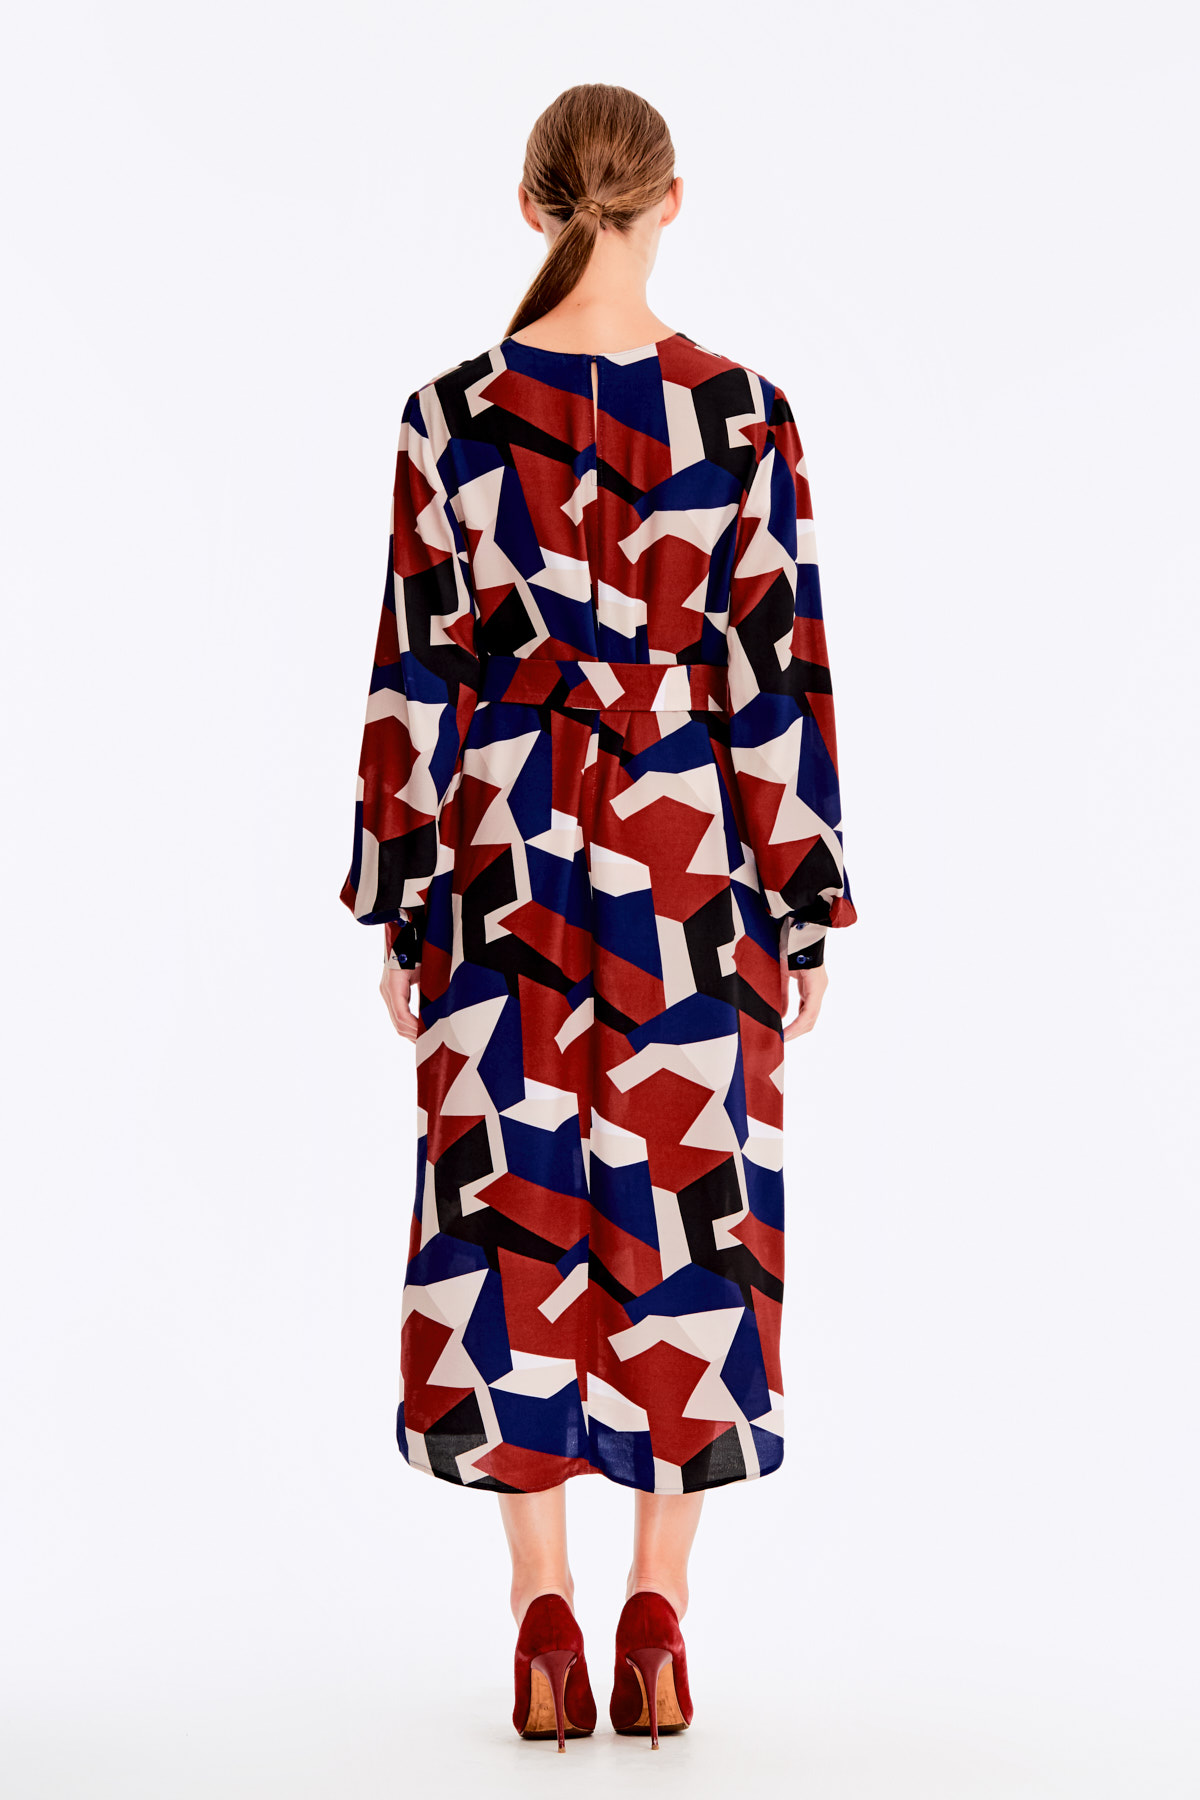 Free midi dress with variegated geometric print ¶¶, photo 8